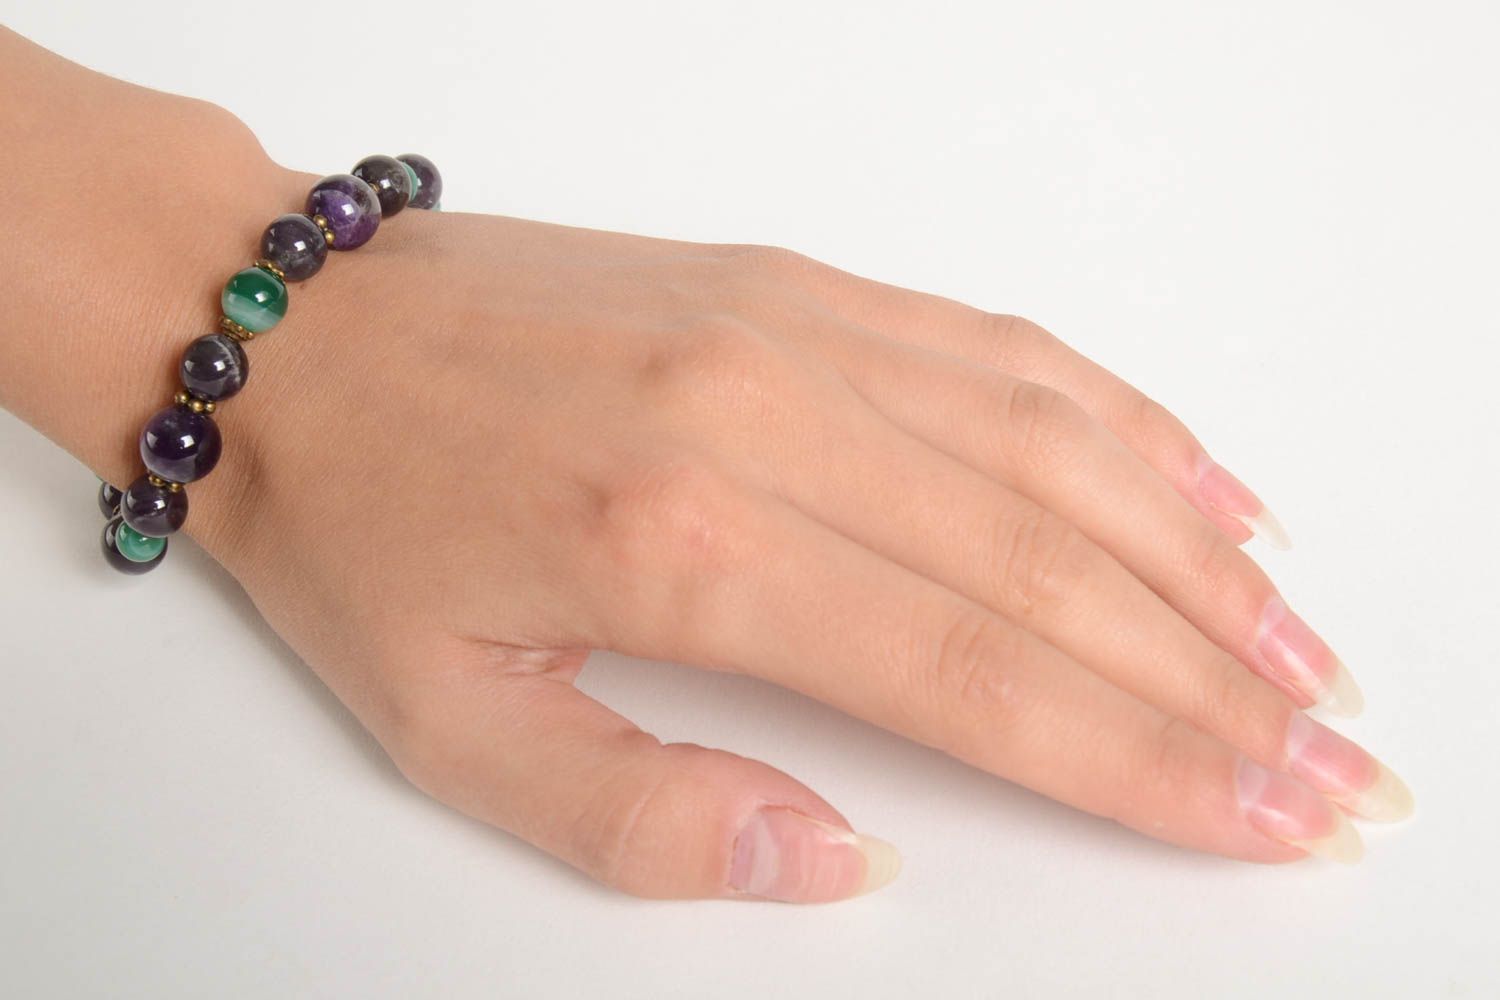 Stylish handmade stone bracelet designs fashion trends accessories for girls photo 2